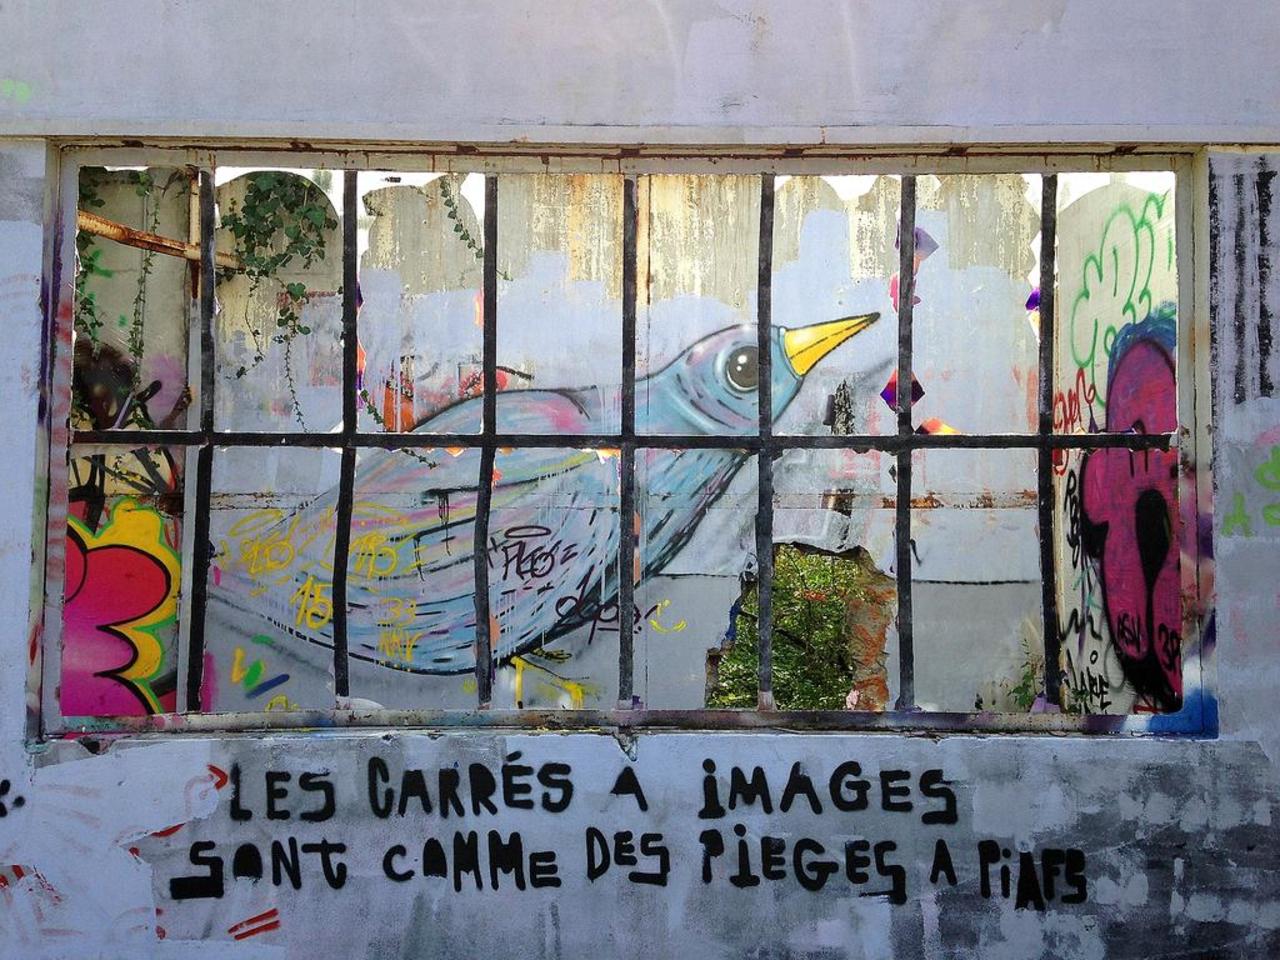 RT @urbacolors: Street Art by Selor in #Bordeaux http://www.urbacolors.com #art #mural #graffiti #streetart https://t.co/XG0tbYtlQq